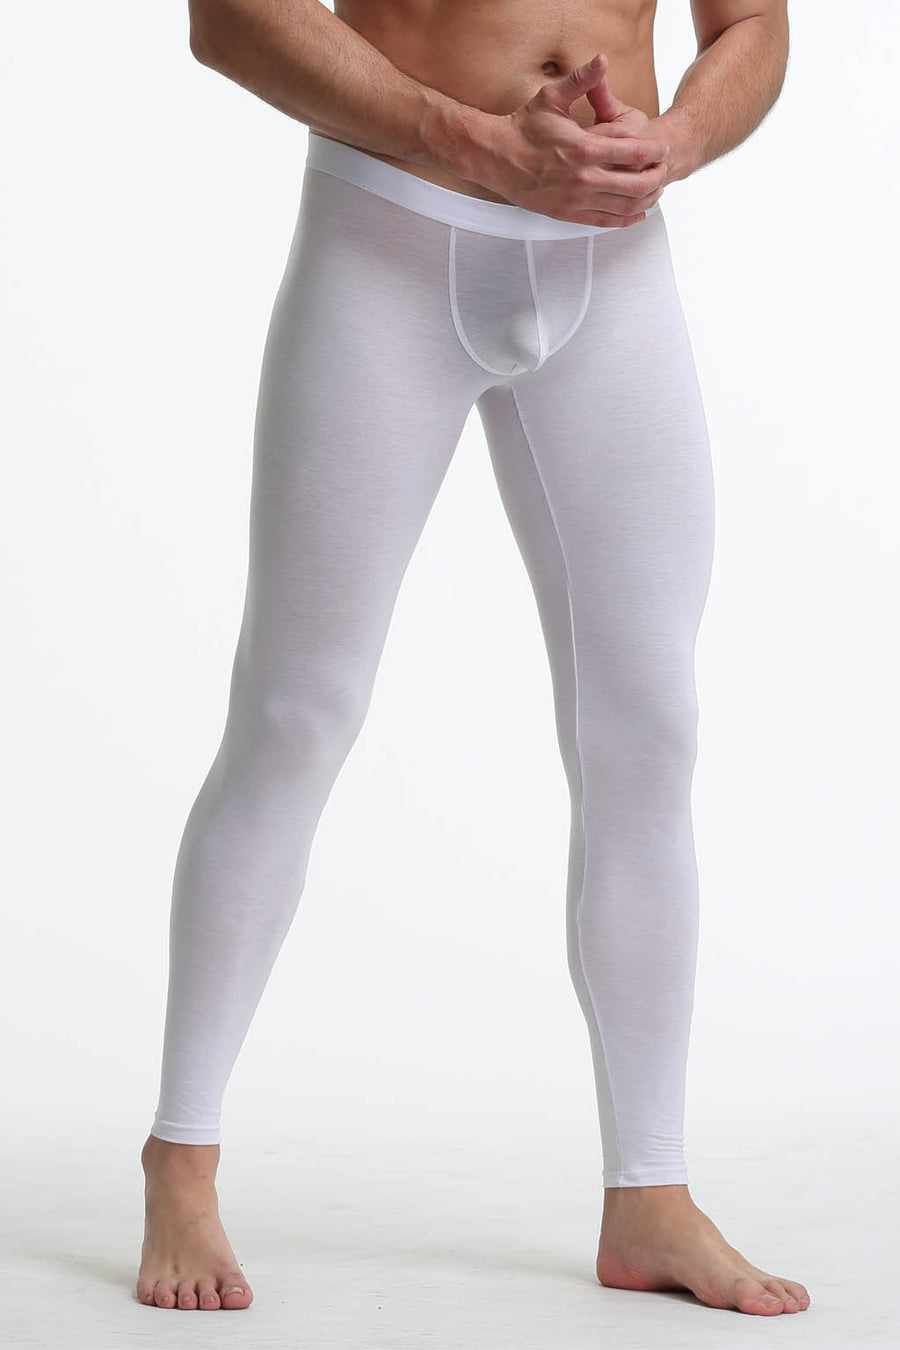 BfM Mens Cotton Long John Pouch Underwear - Snug Pouch – Bodywear for Men